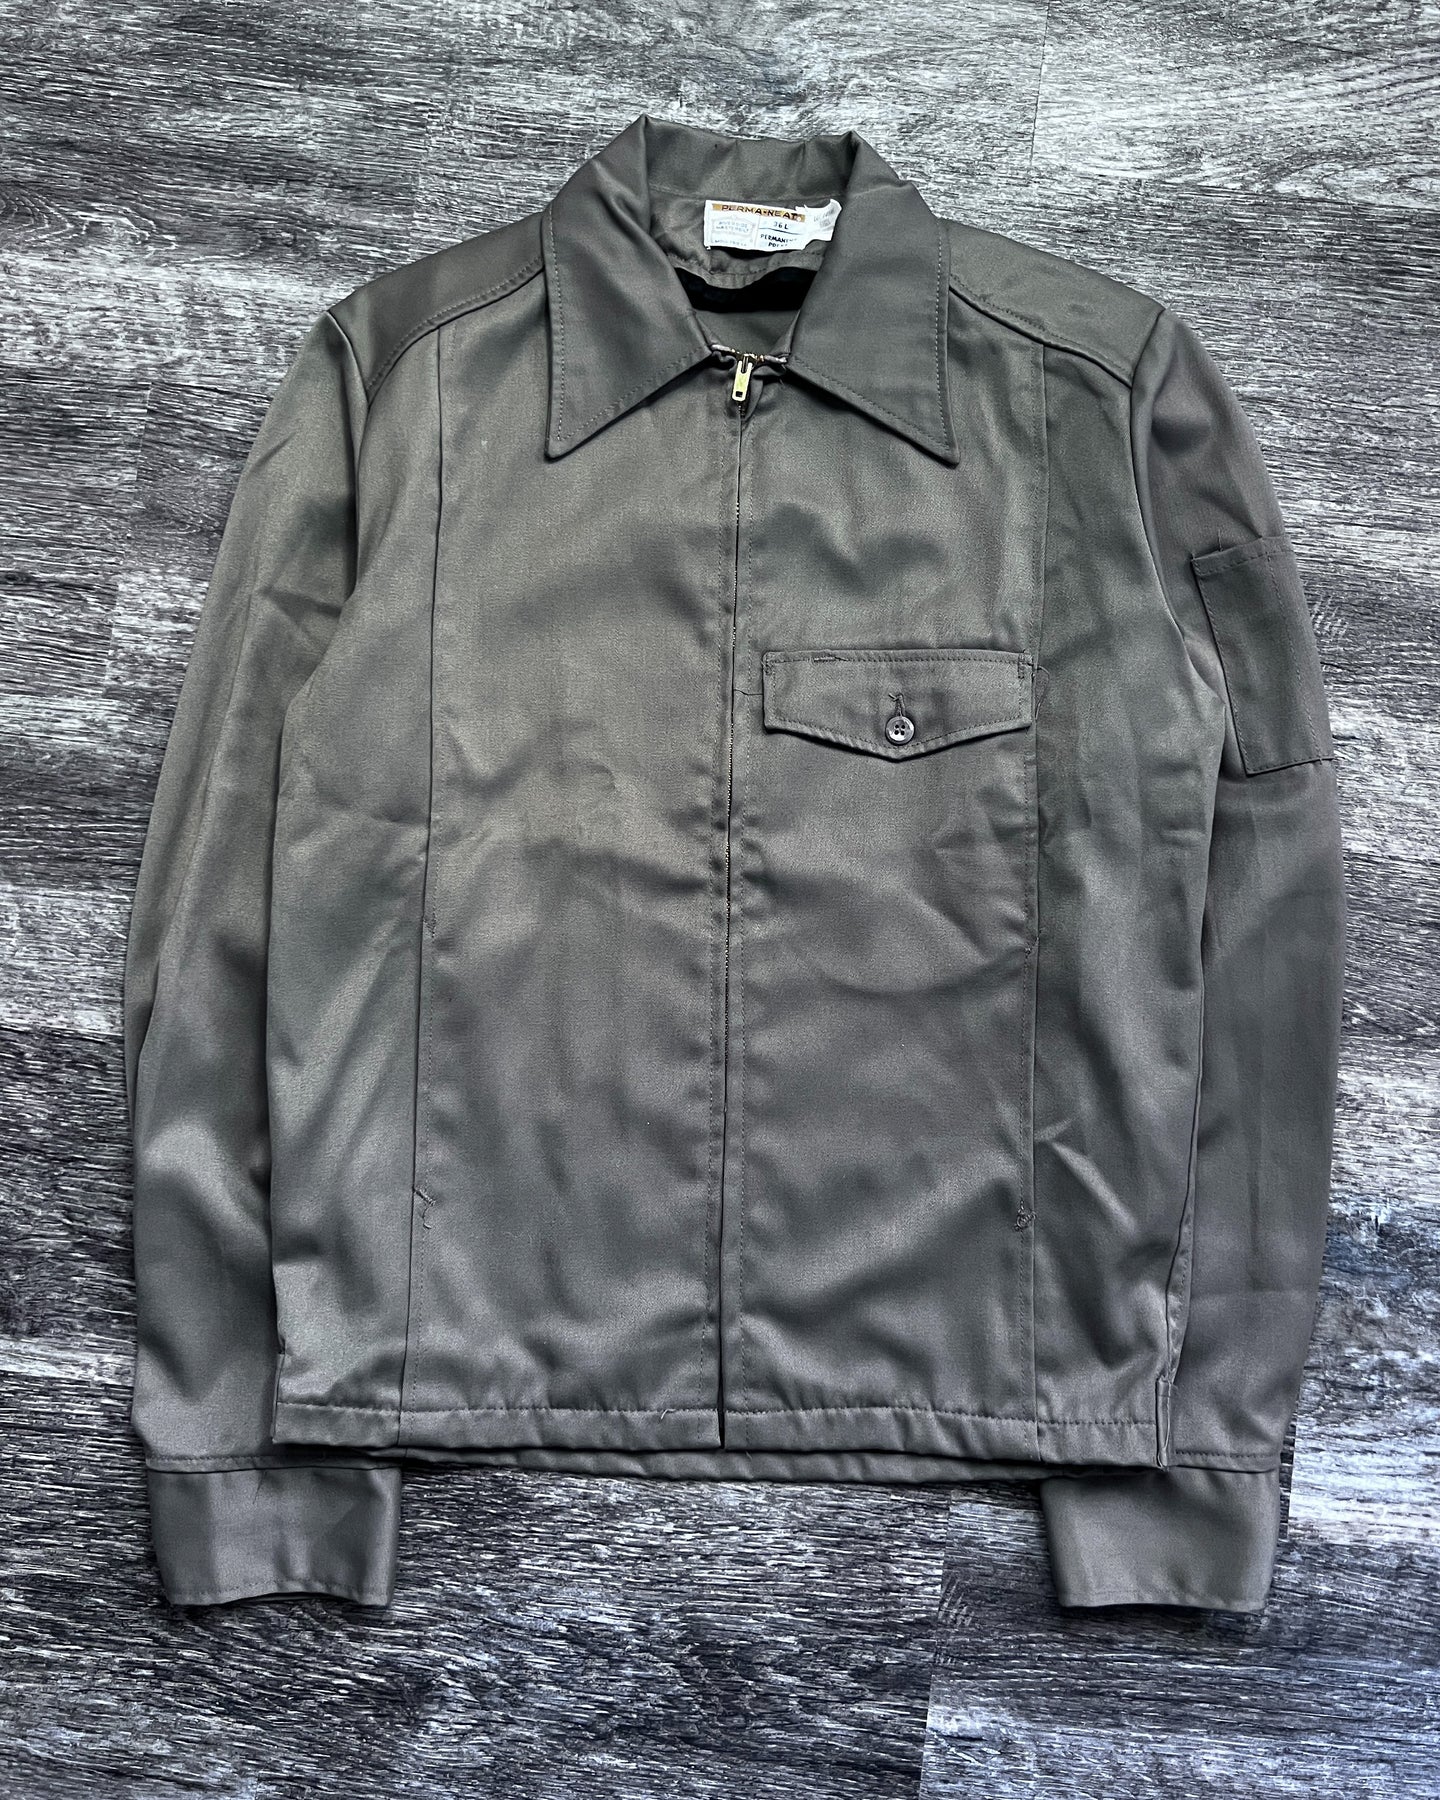 1960s Slate Brown Work Jacket - Size Large